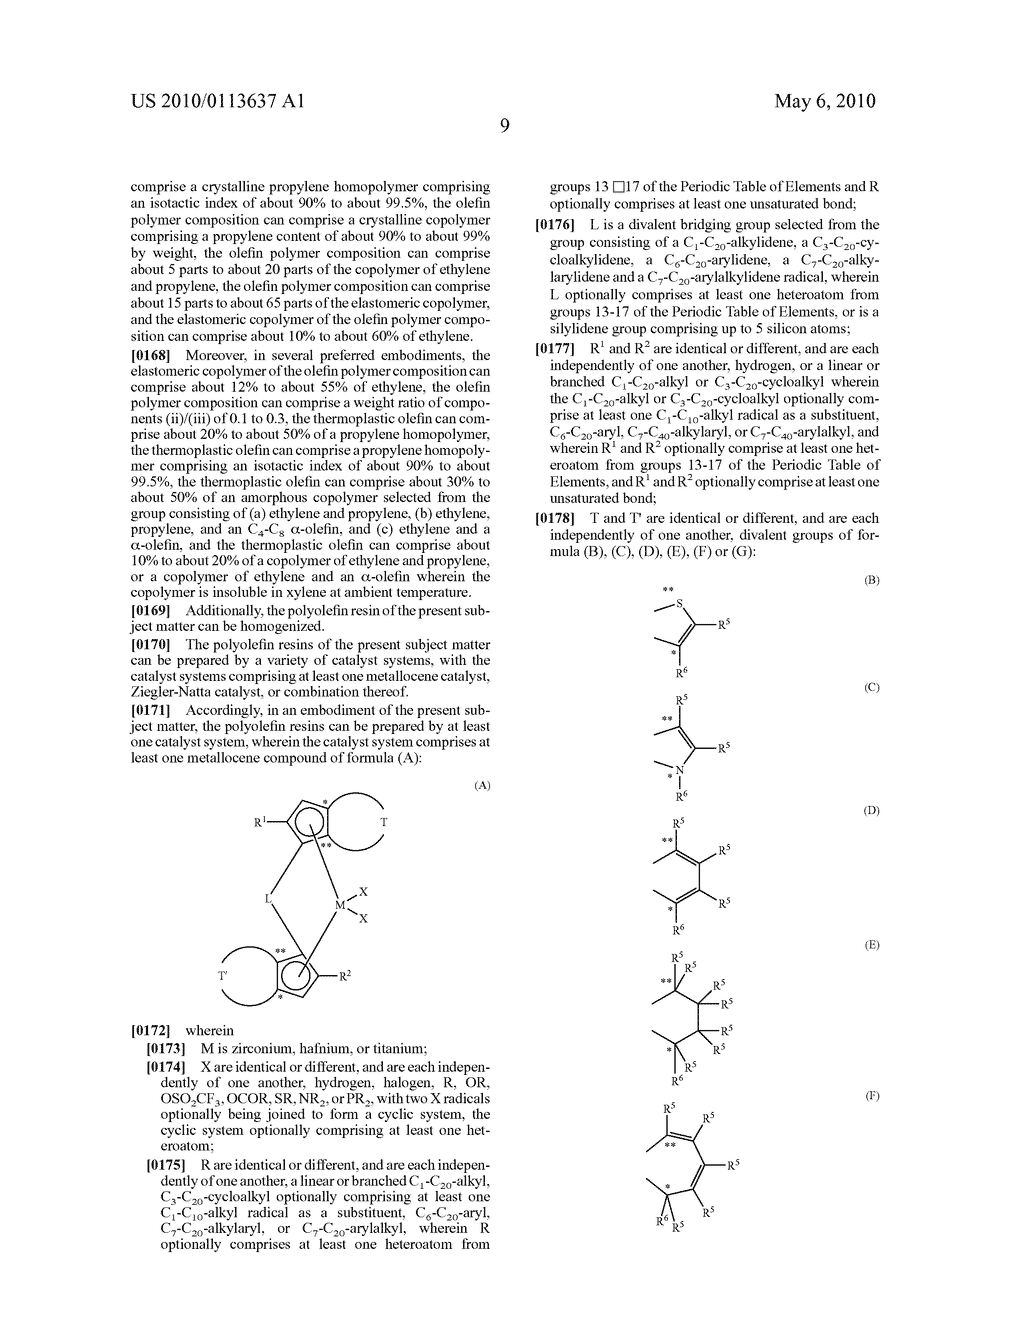 IRRADIATED POLYOLEFIN COMPOSITION COMPRISING A NON-PHENOLIC STABILIZER - diagram, schematic, and image 10